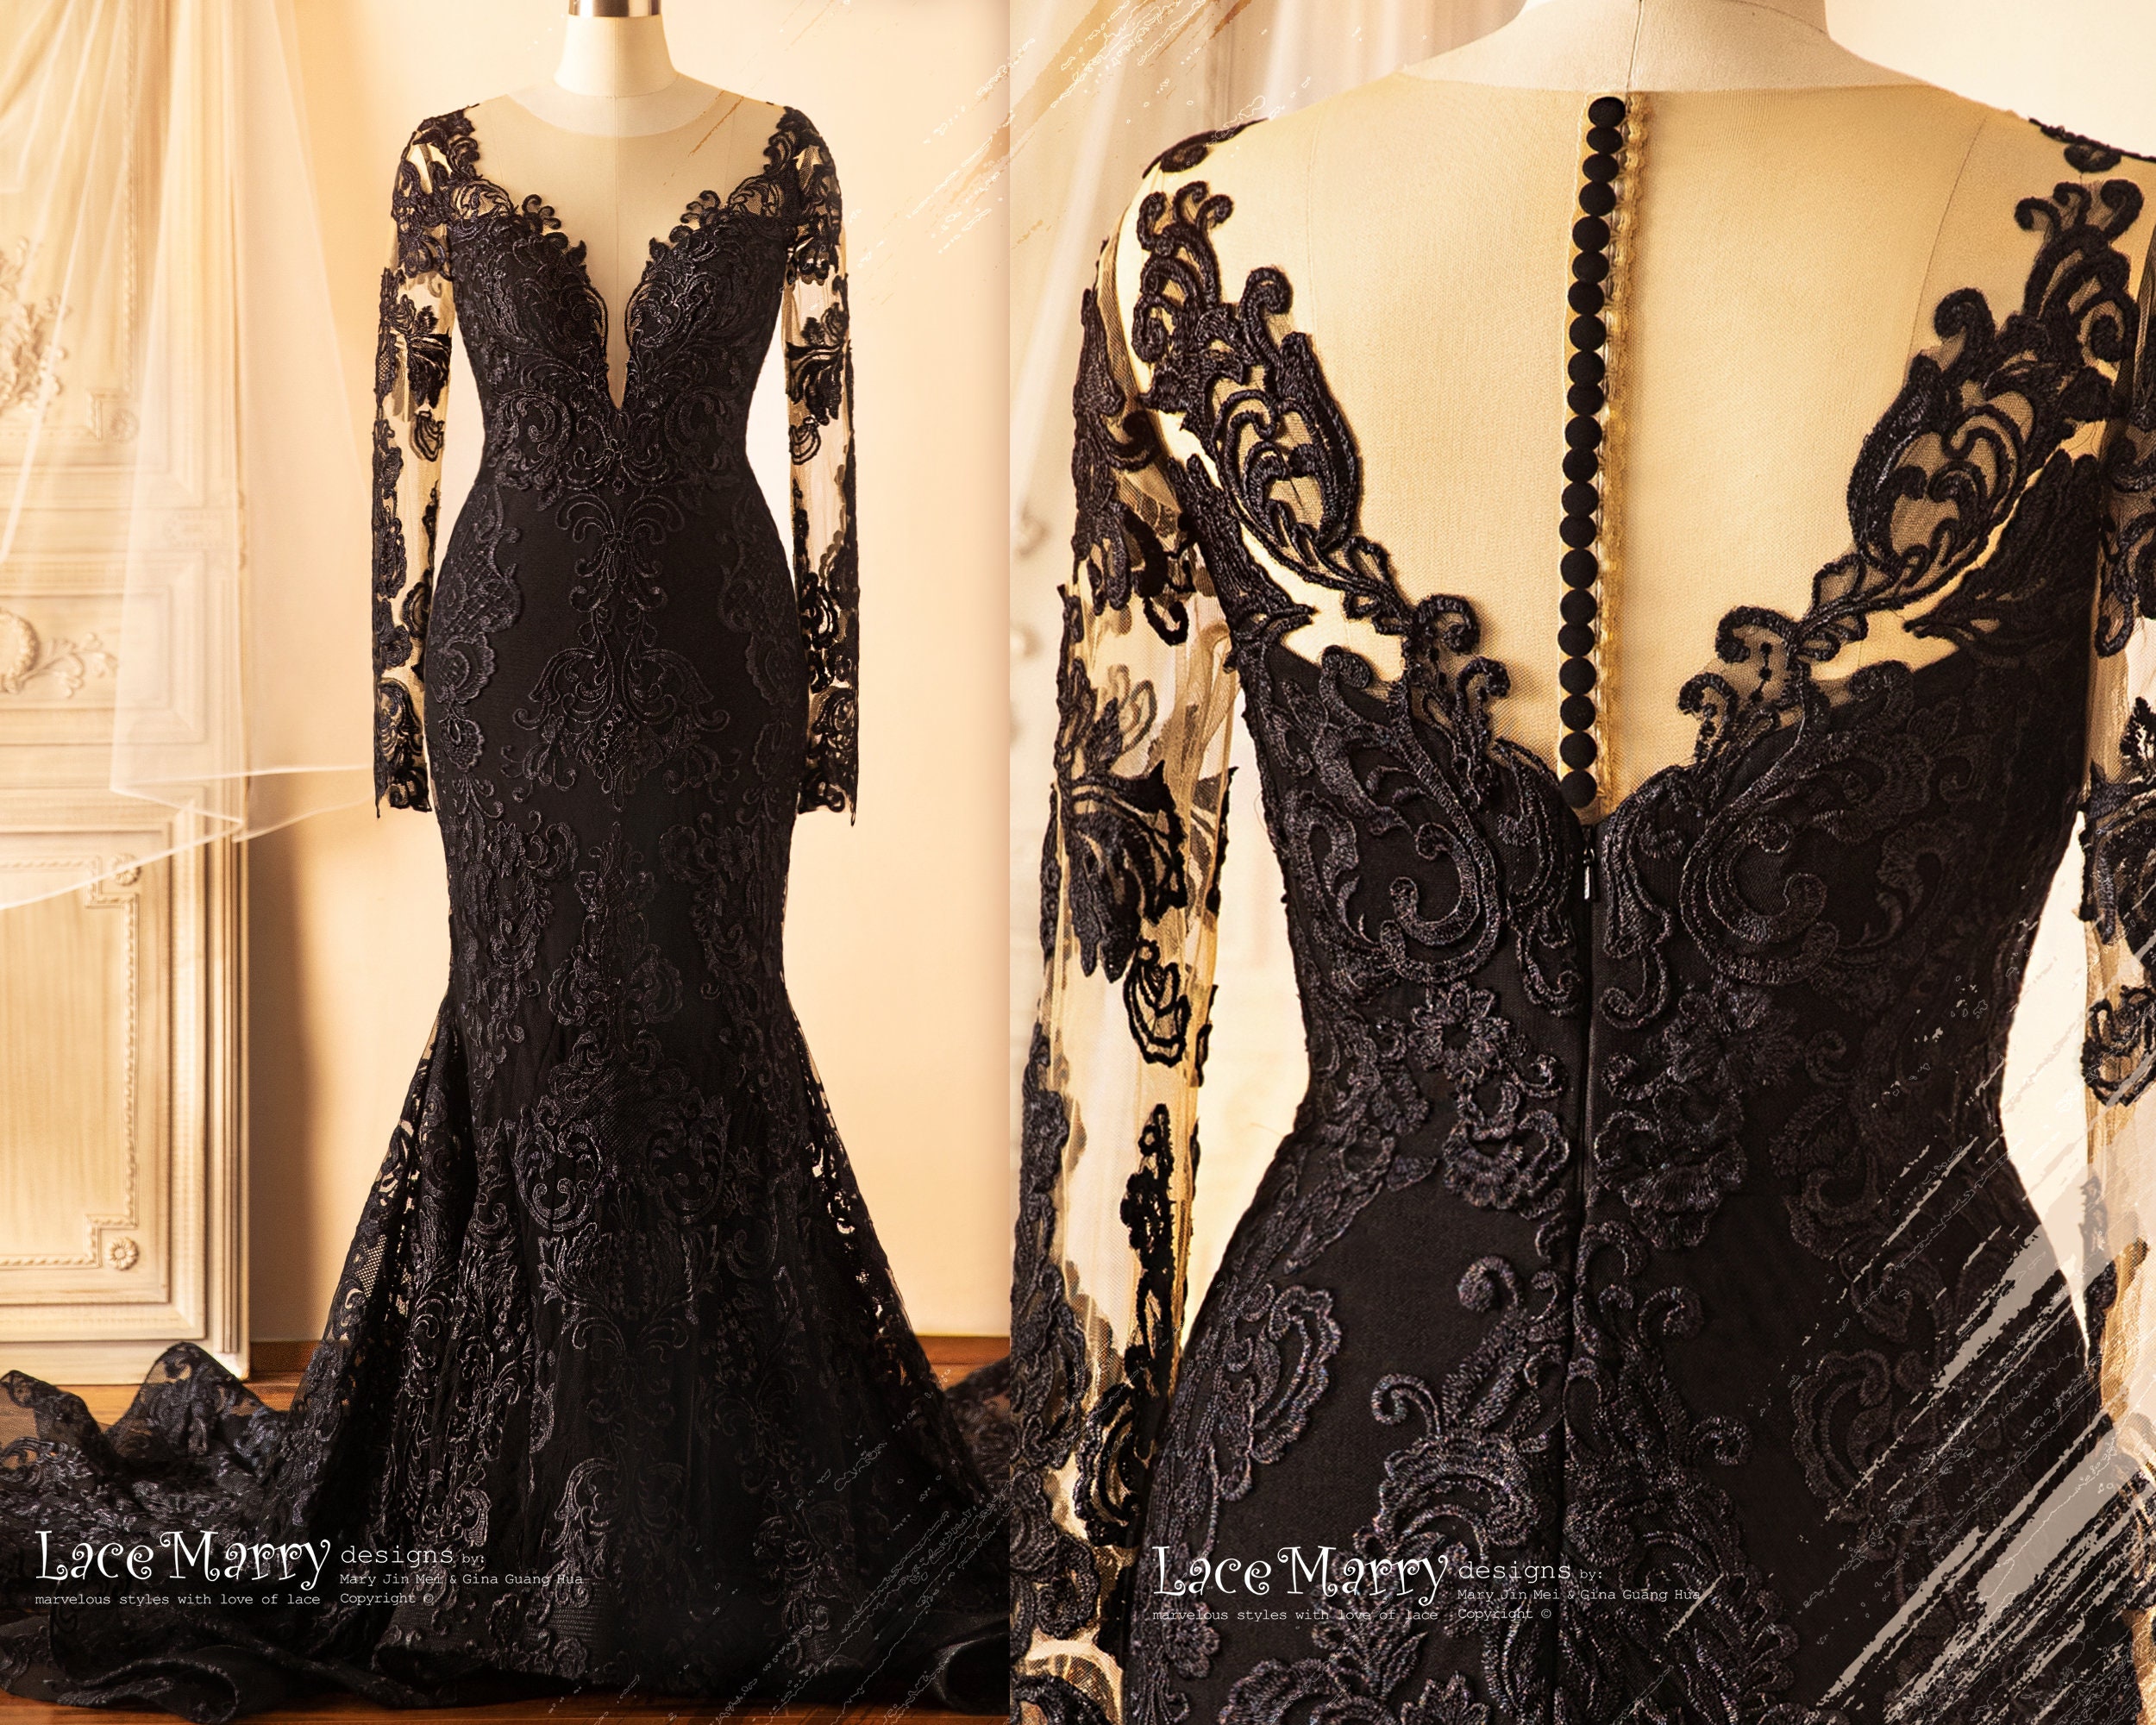 Giana Sheer Lace Maxi Dress - Black